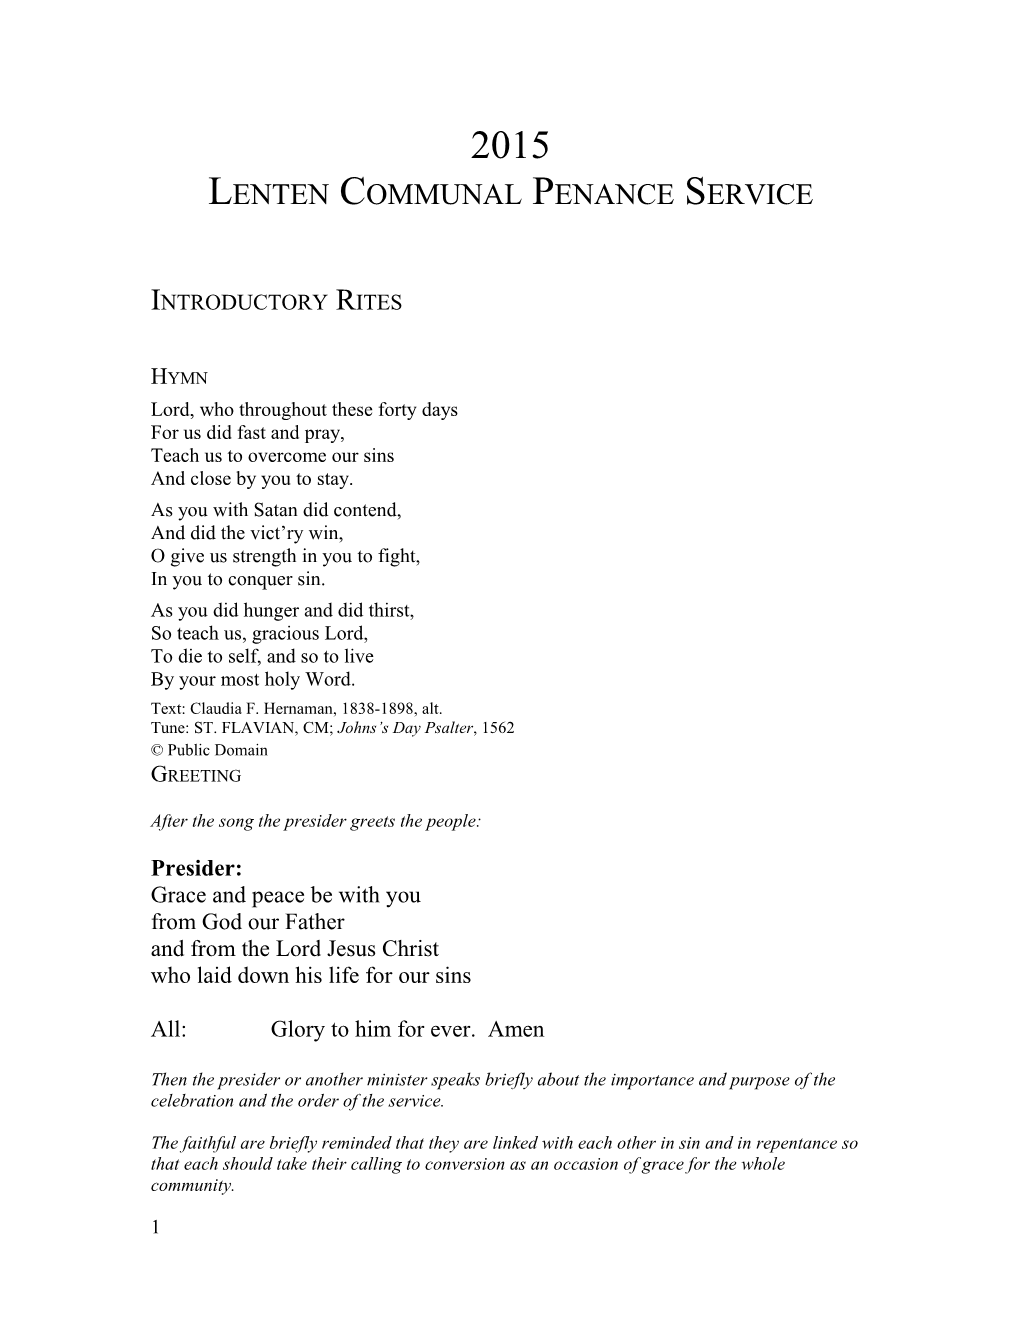 Lenten Communal Penance Service